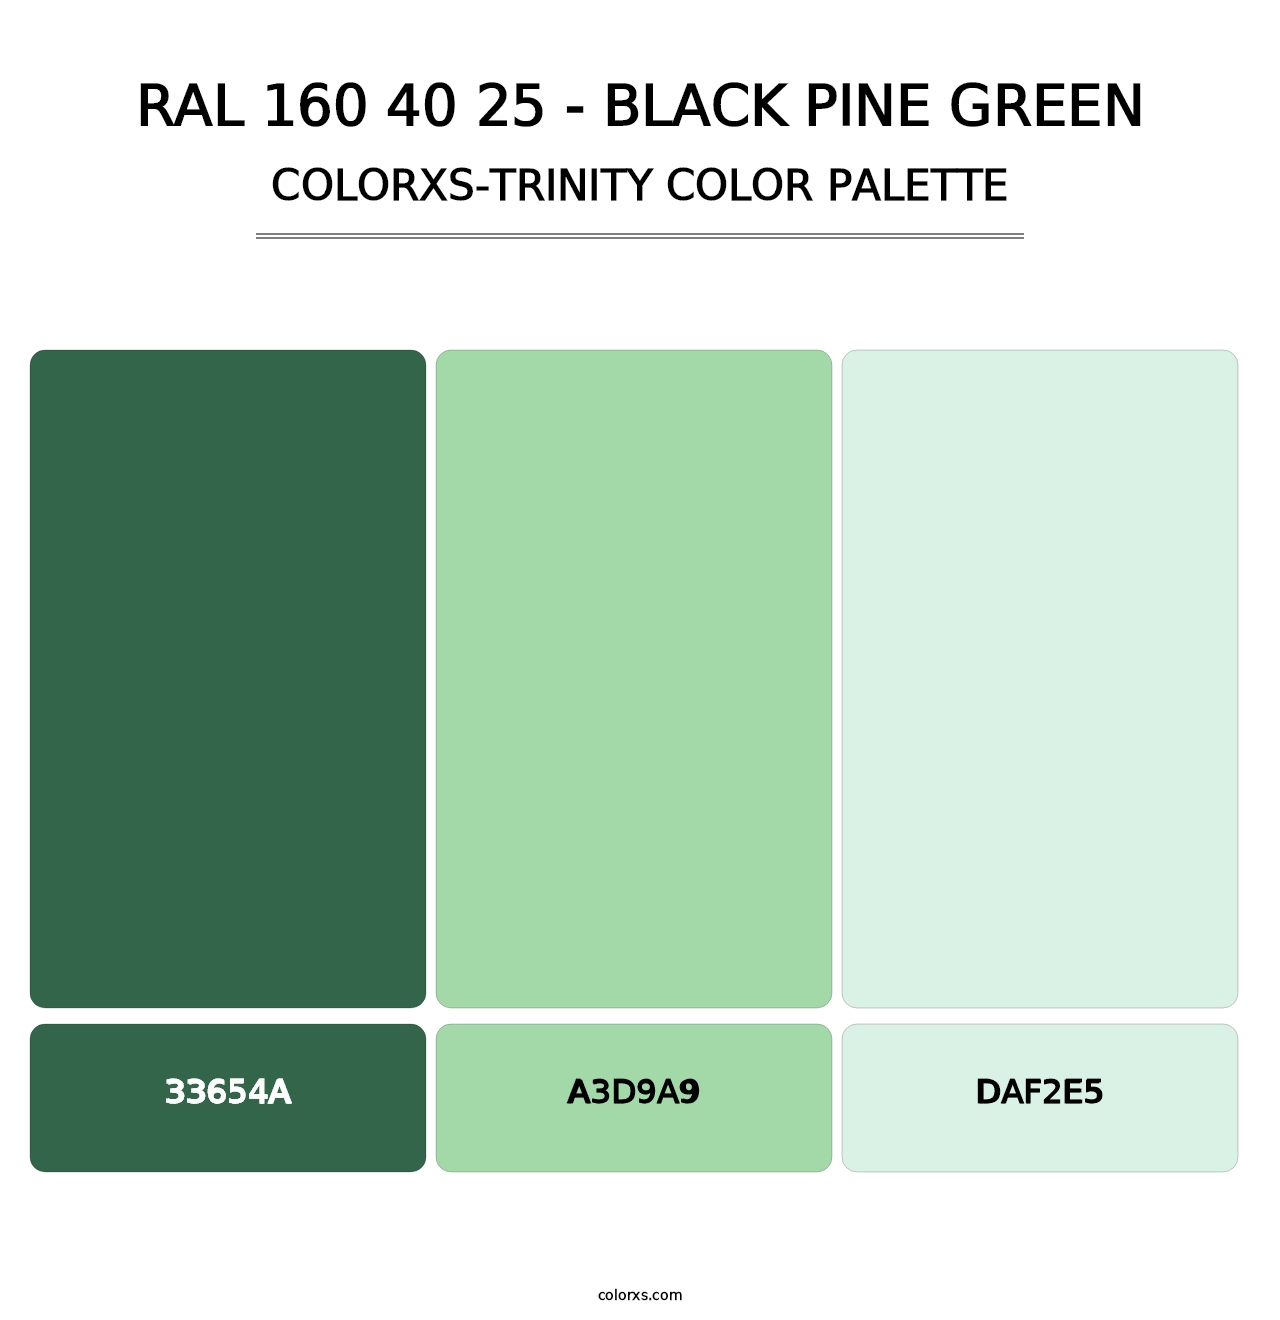 RAL 160 40 25 - Black Pine Green - Colorxs Trinity Palette